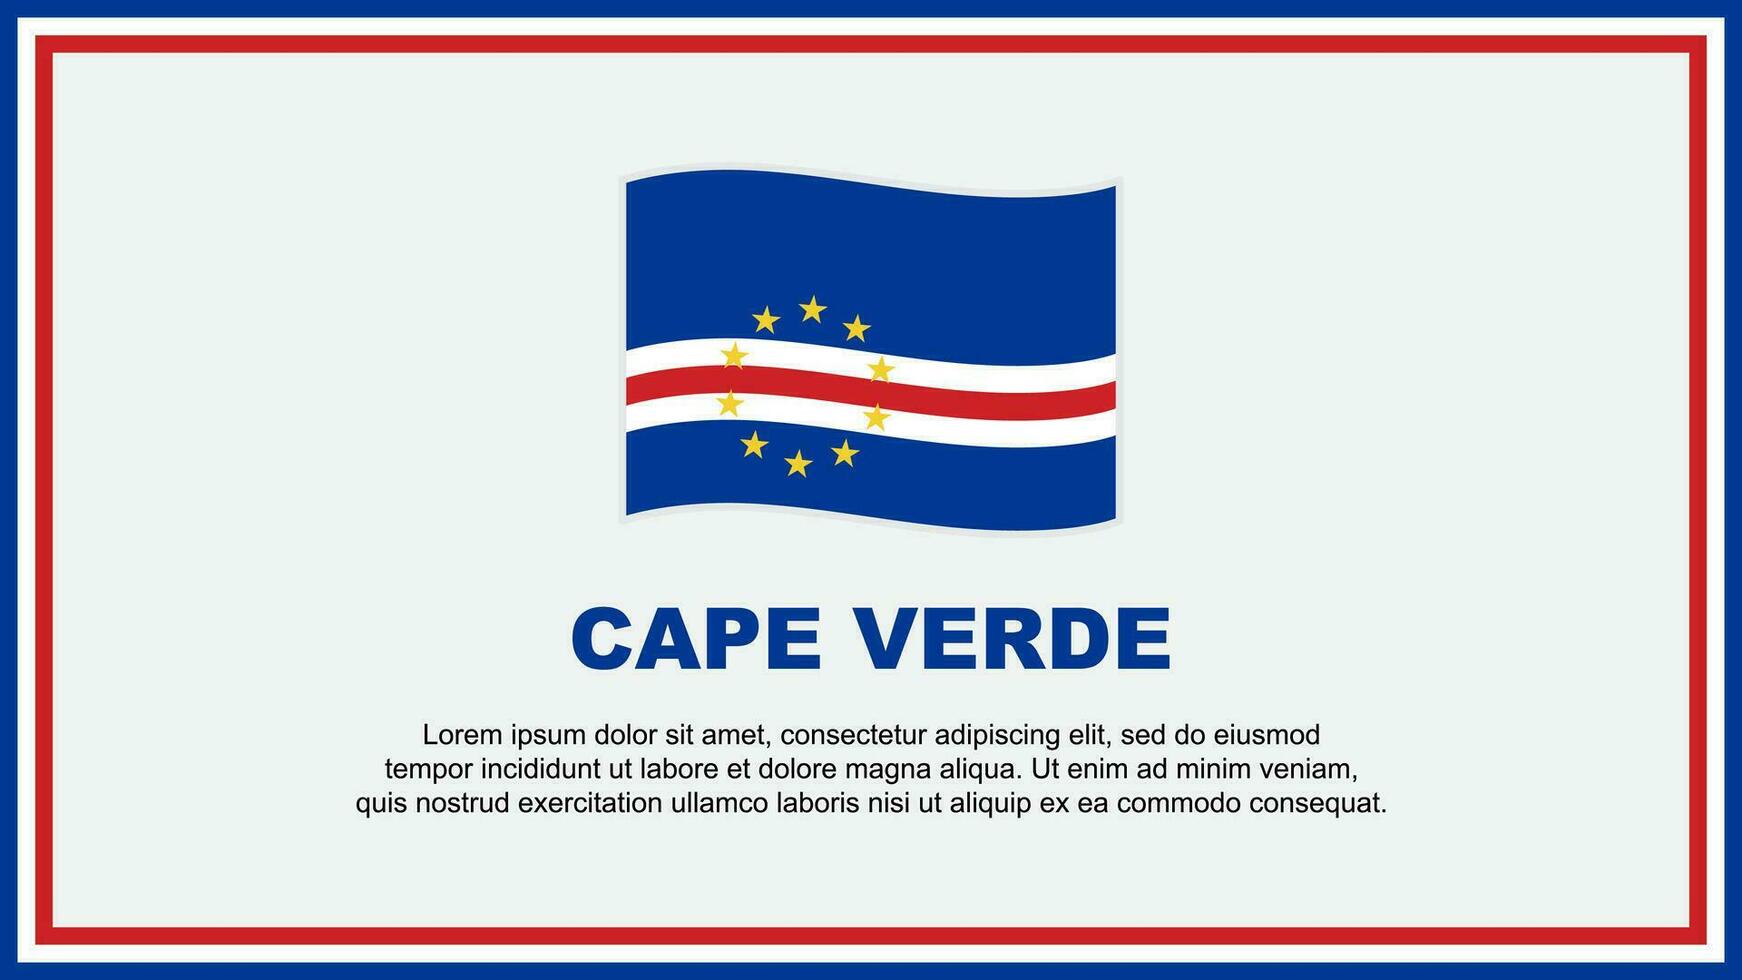 Cape Verde Flag Abstract Background Design Template. Cape Verde Independence Day Banner Social Media Vector Illustration. Cape Verde Banner